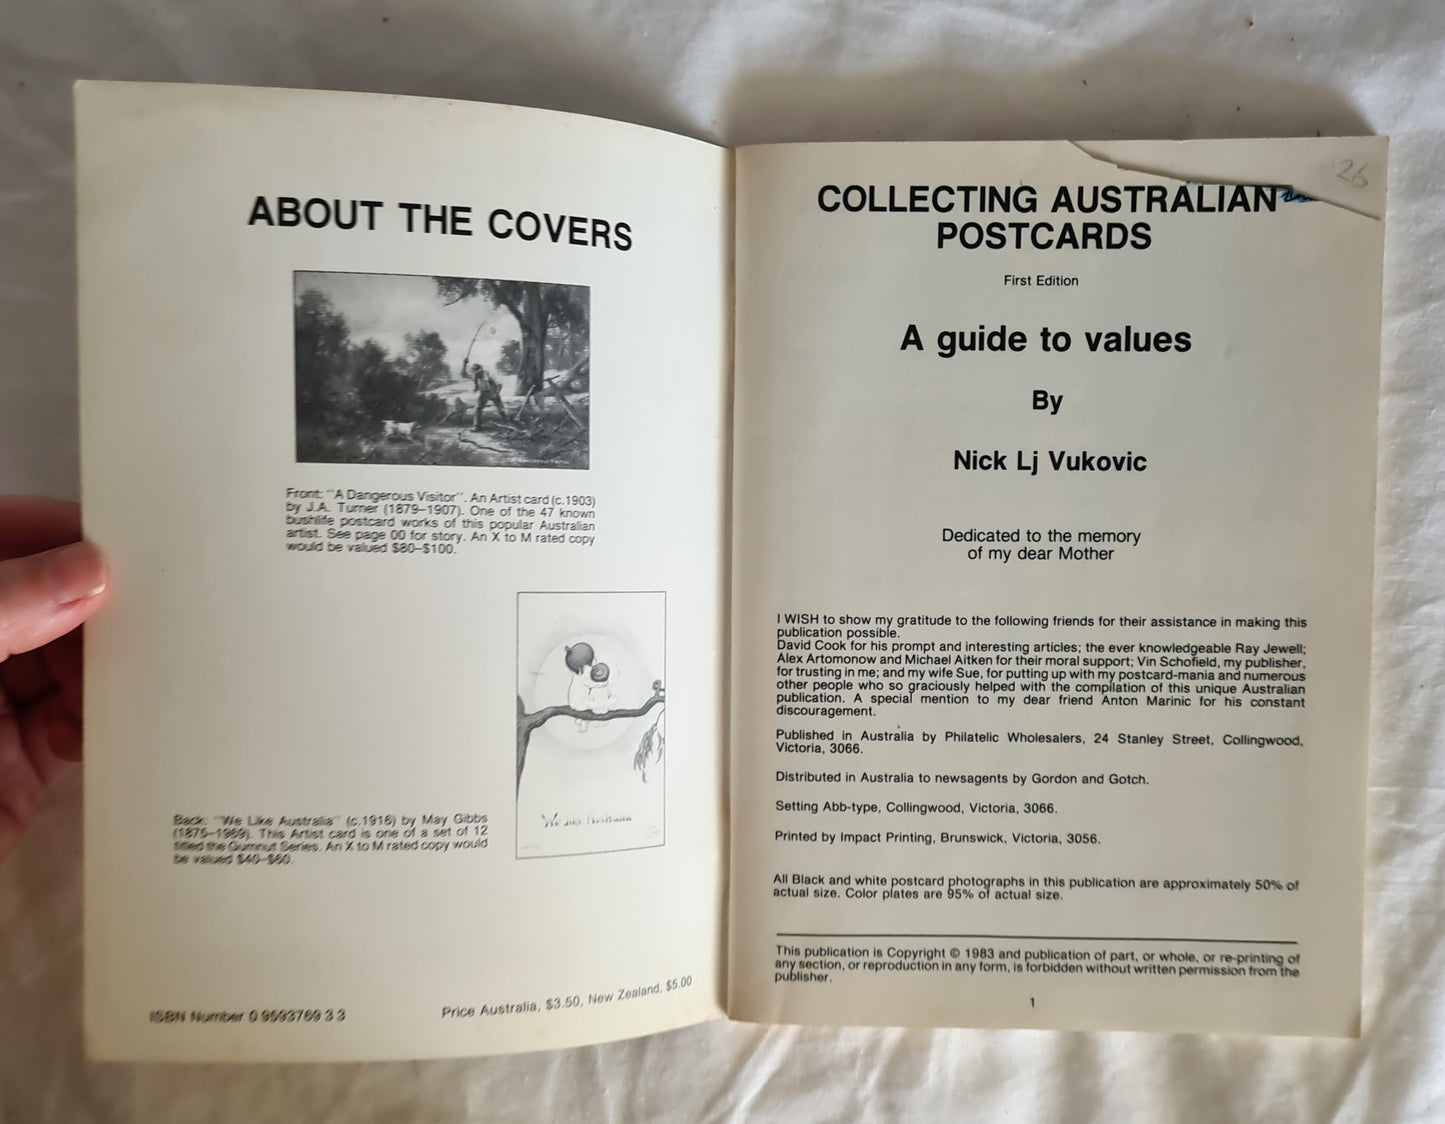 Collecting Australian Postcards by Nick Lj Vukovic